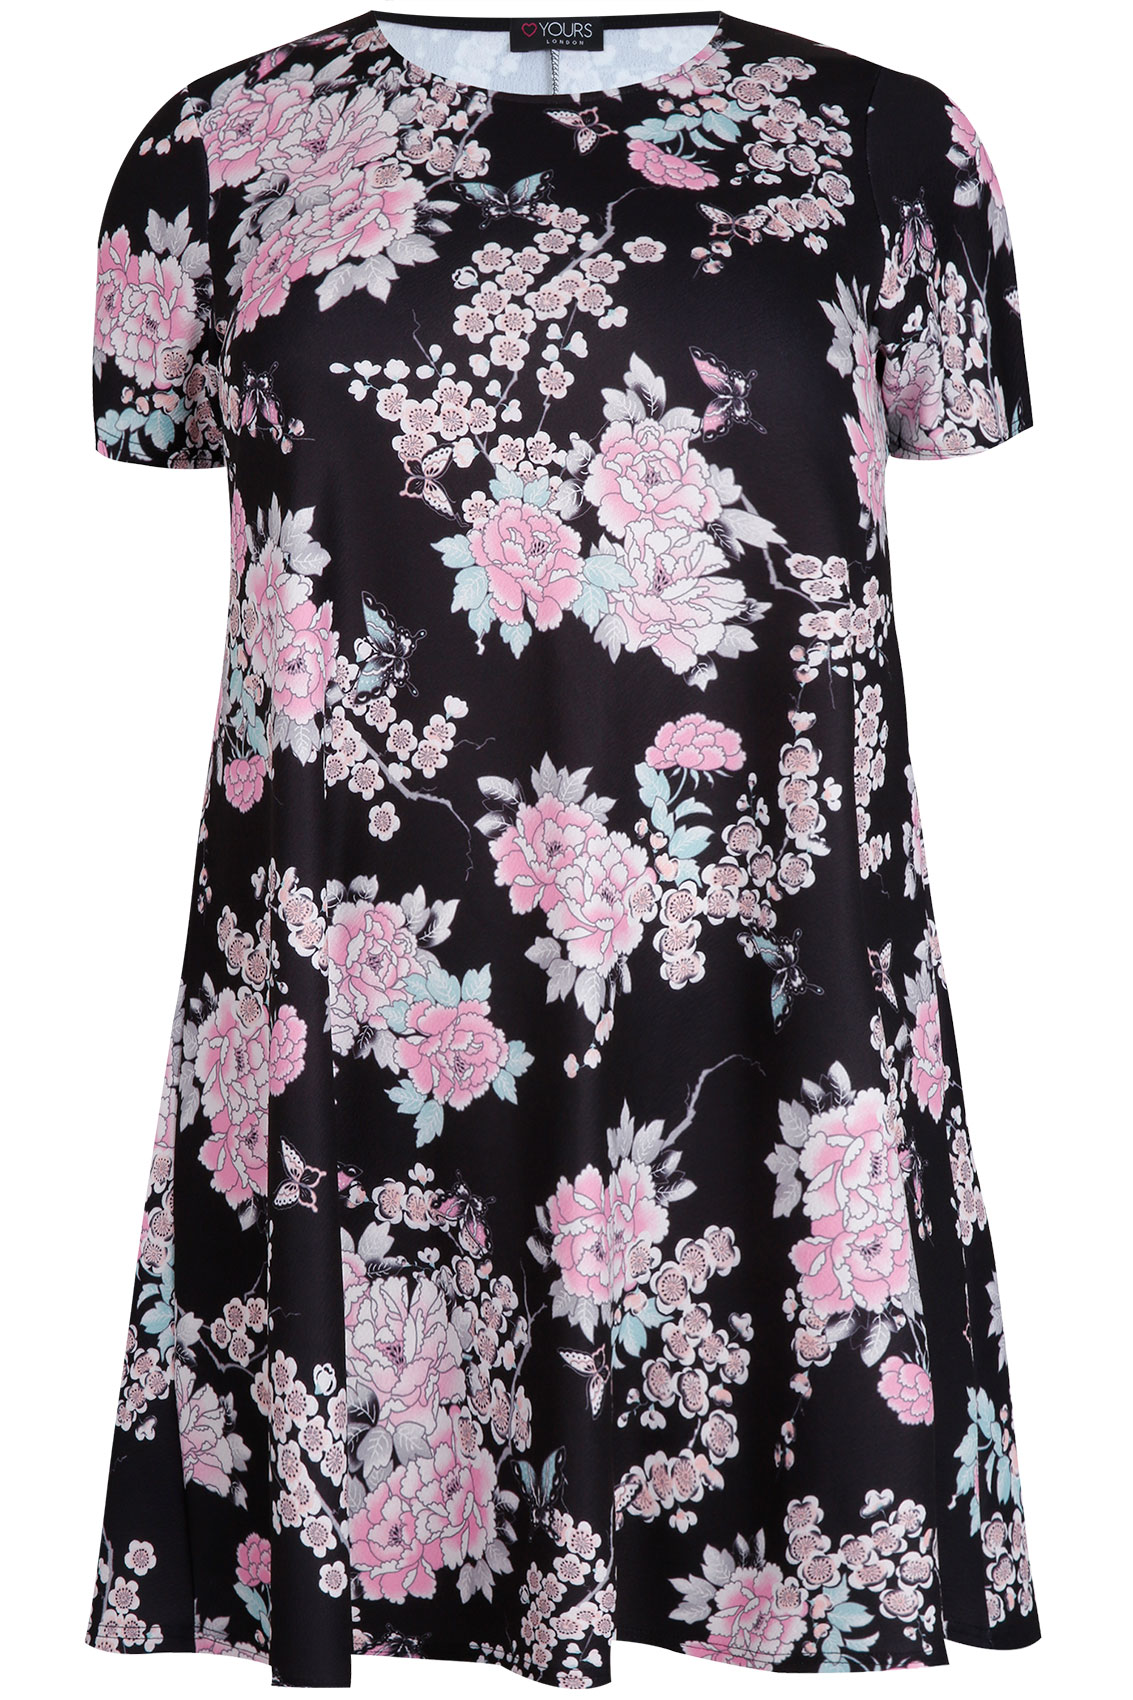 Black & Pink Oriental Floral Print Swing Dress plus Size 16 to 32